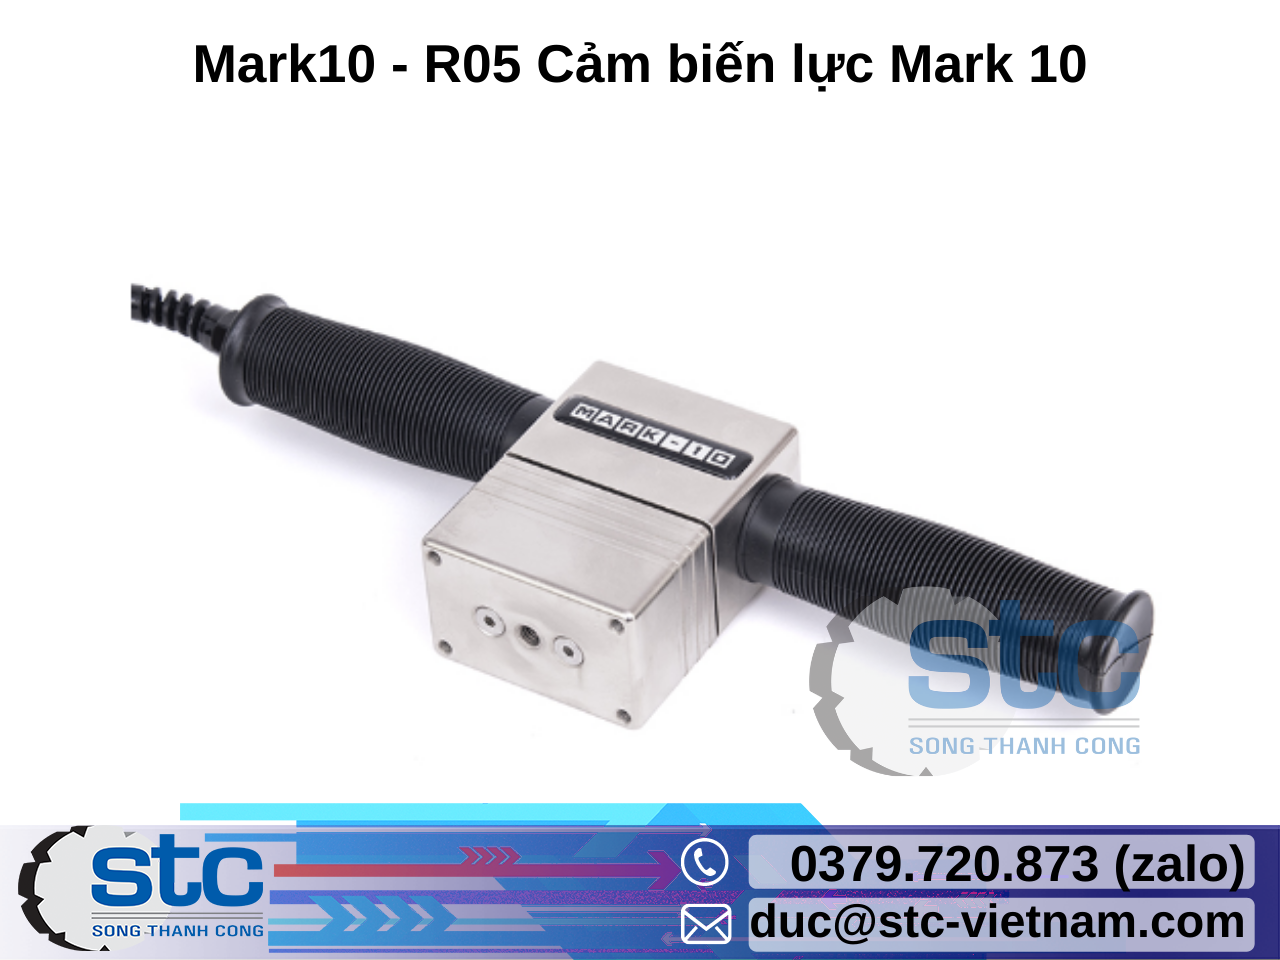 mark10-r05-cam-bien-luc-mark-10.png